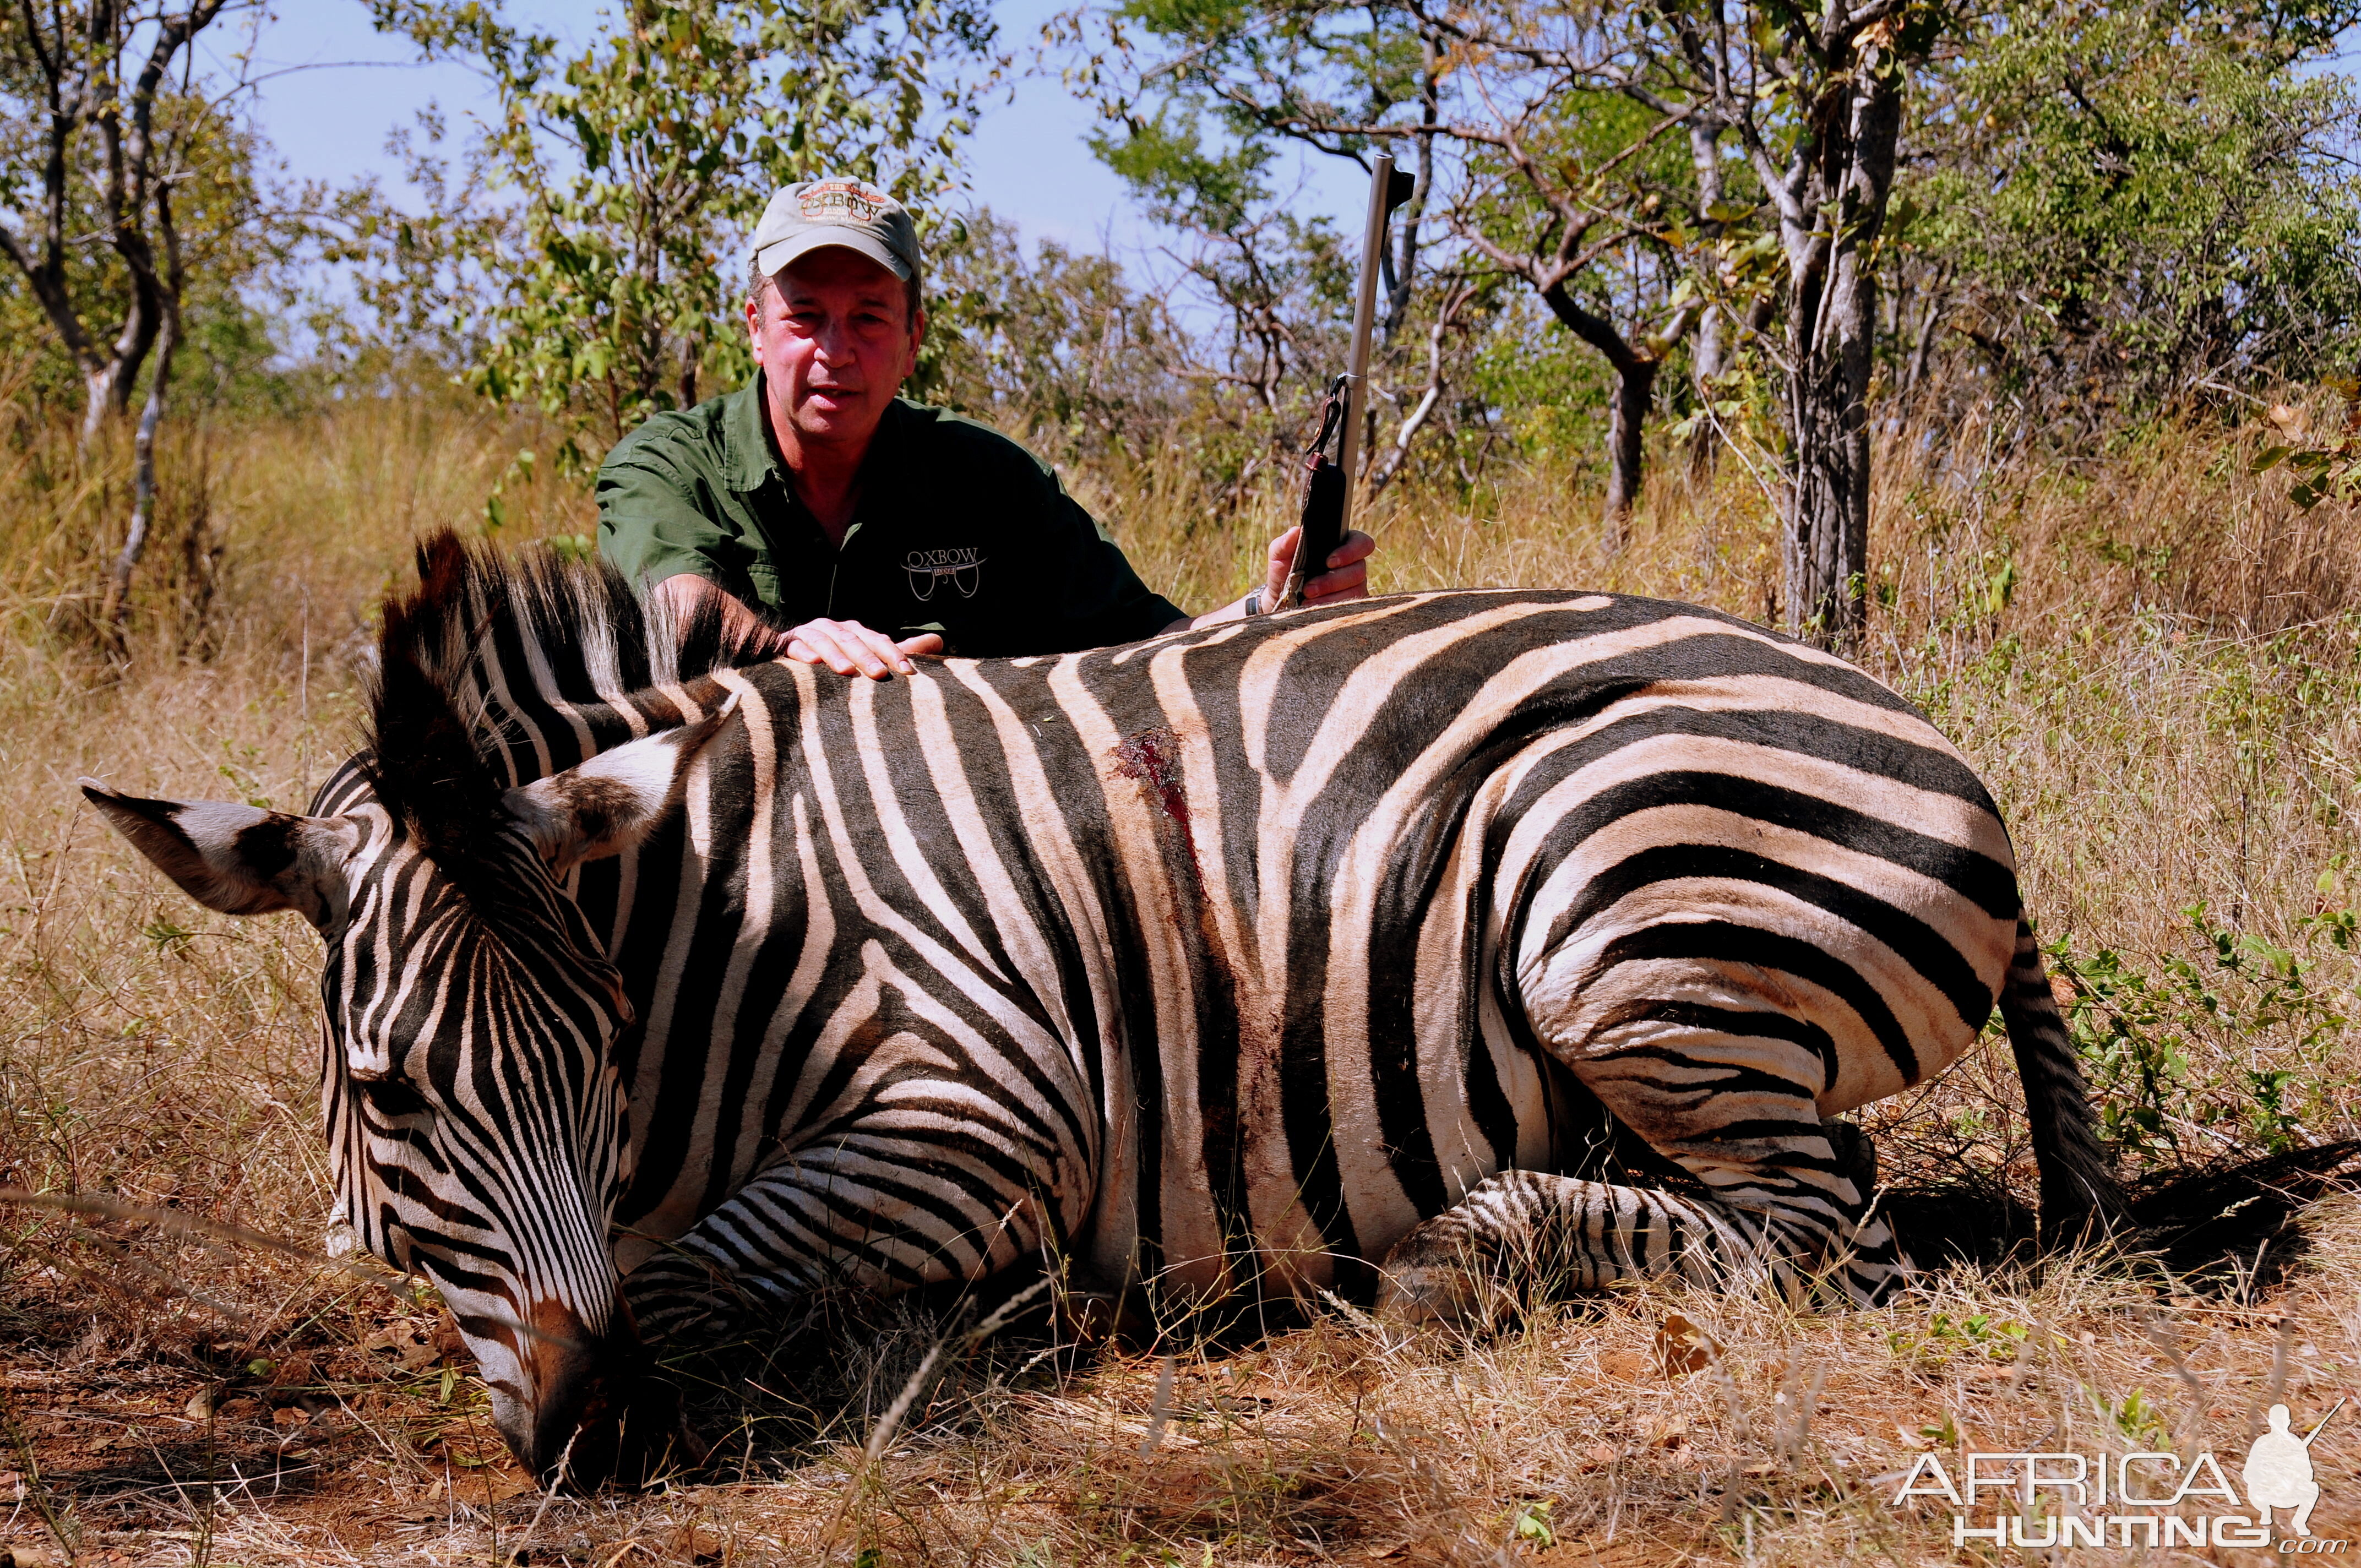 Zebra taken in Zimbabwe Matetsi Preserve